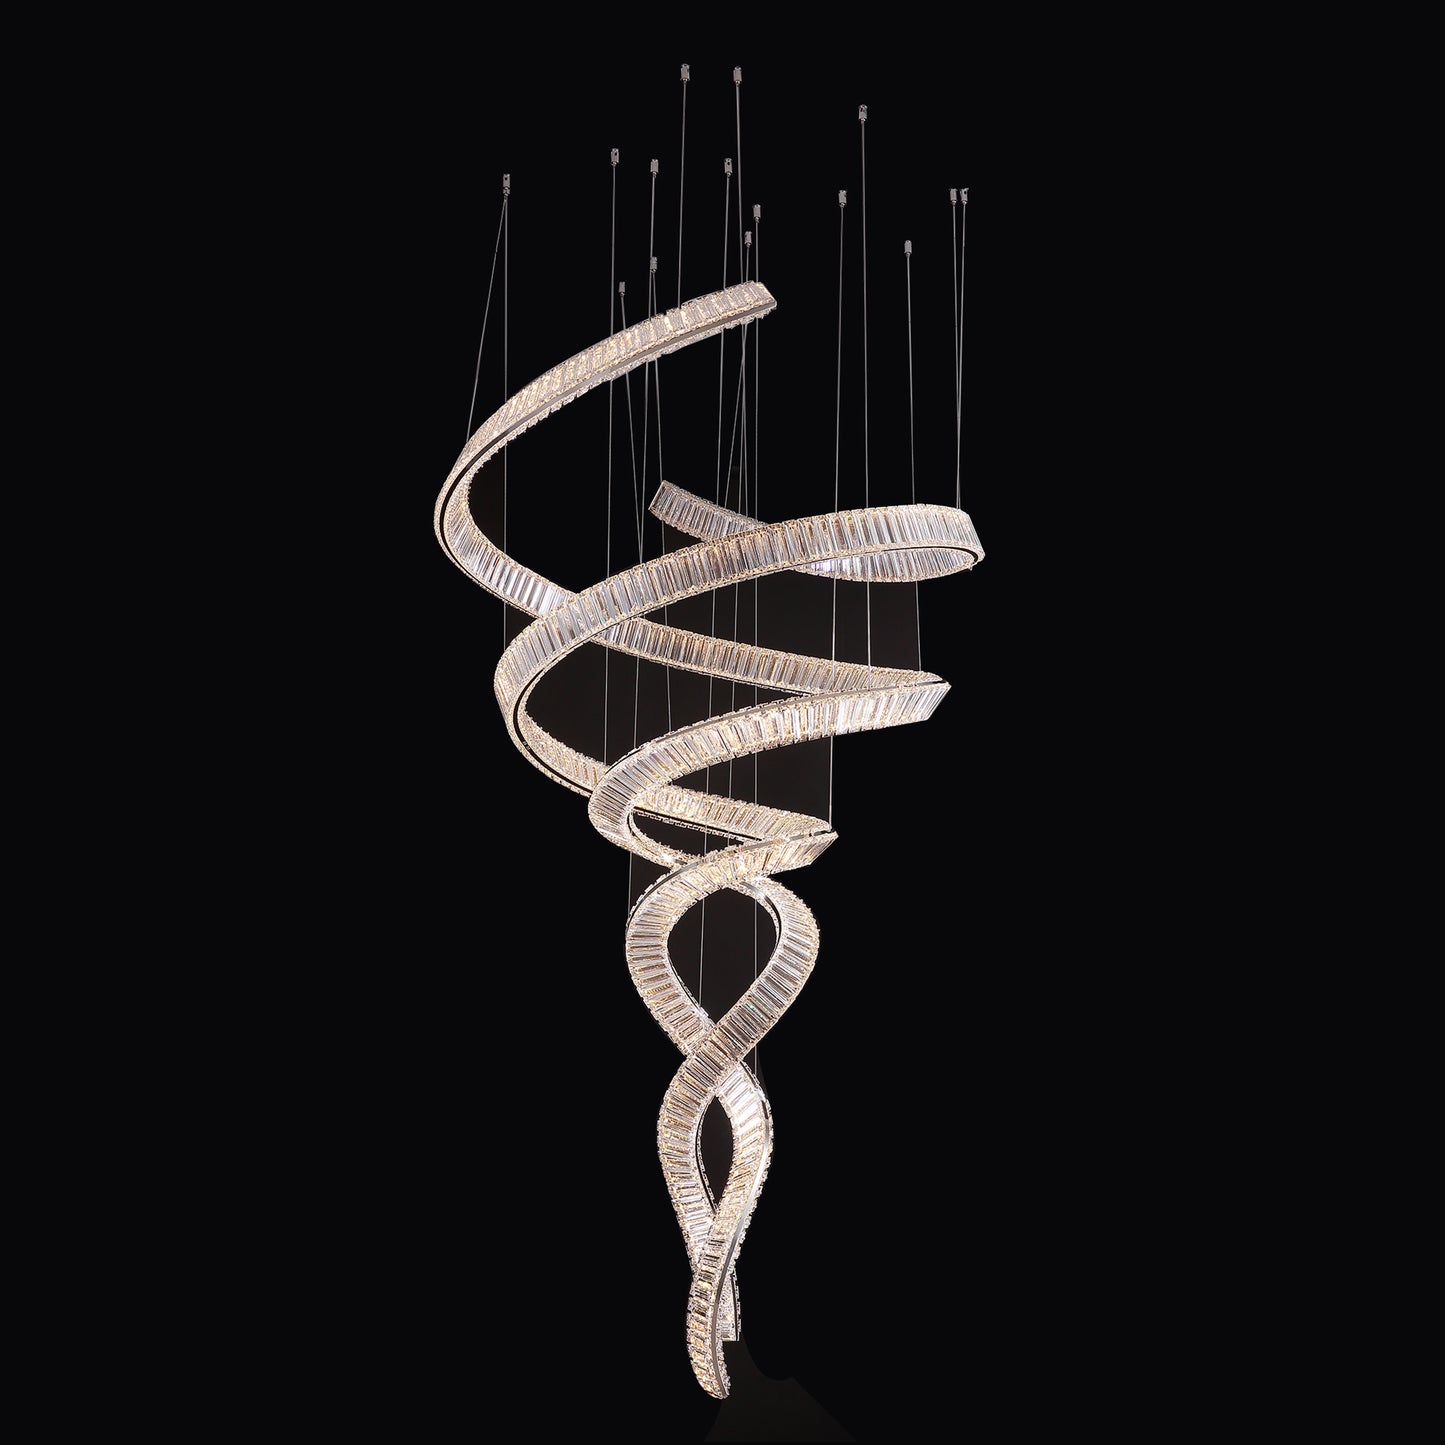 Luxury Stairwell led crystal chandelier